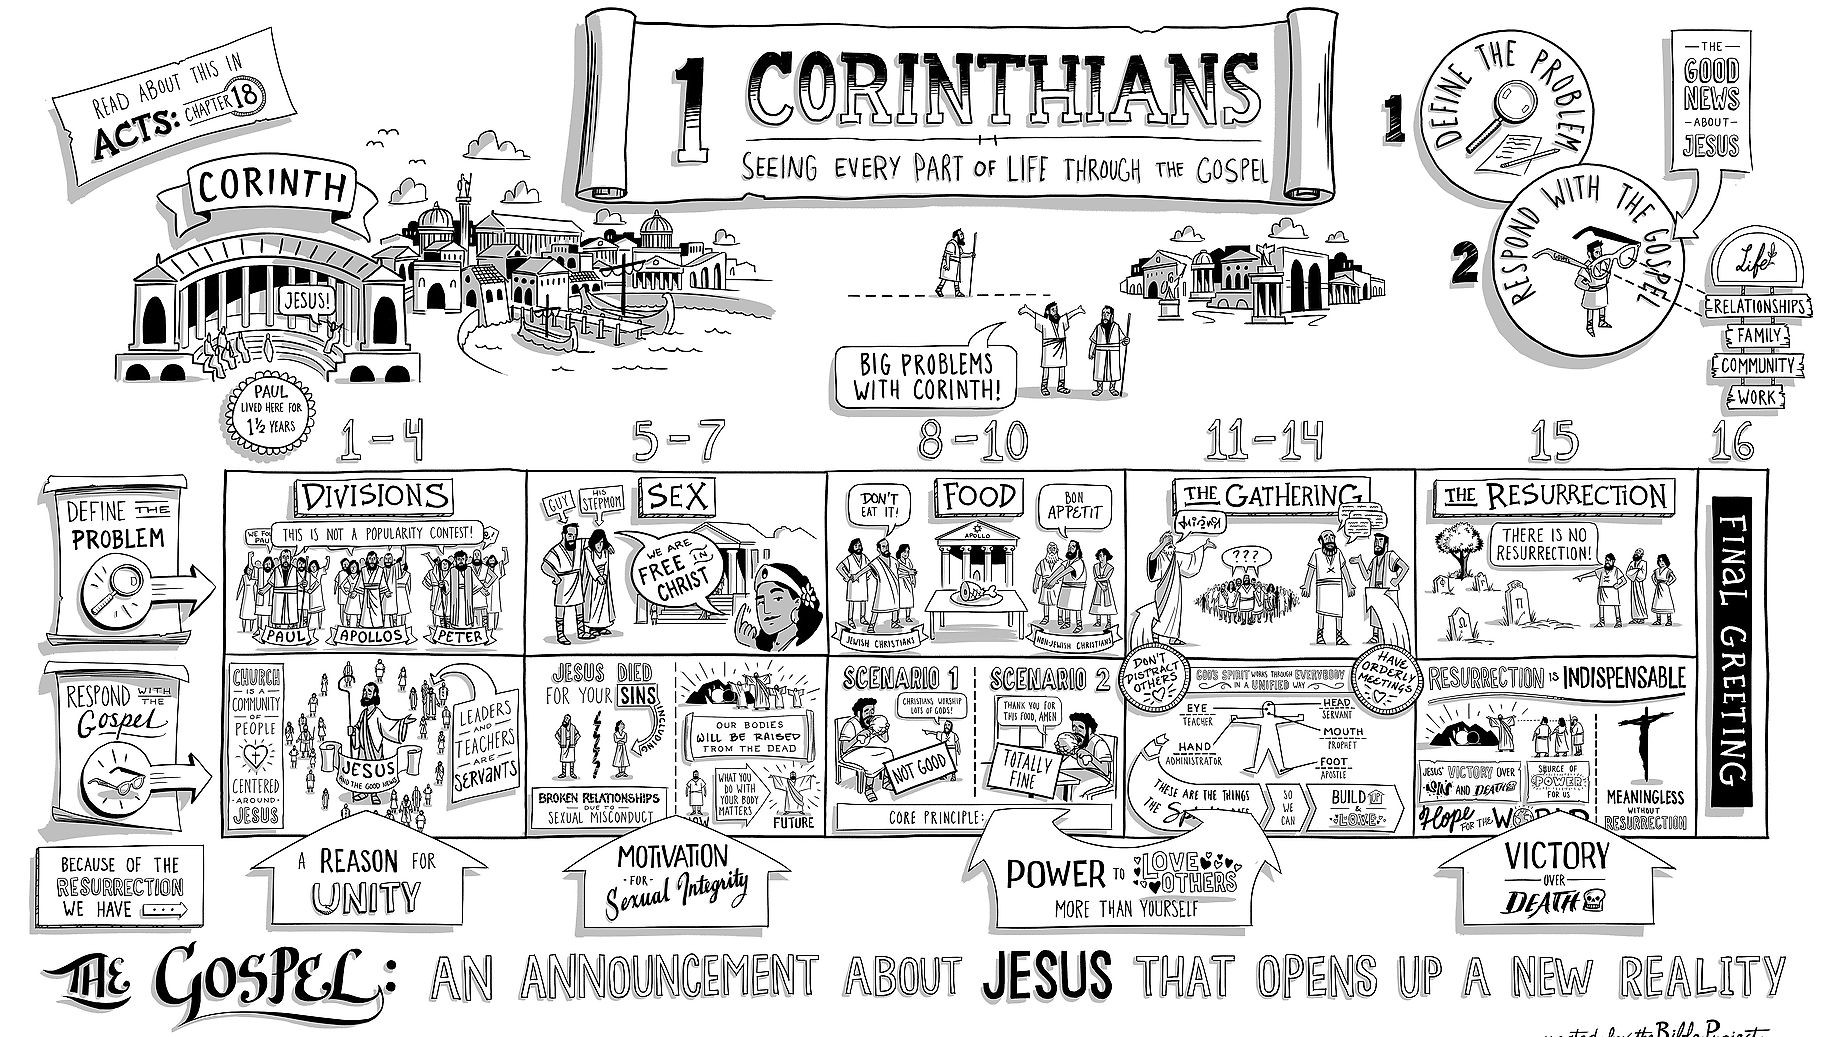 Book of Corinthians